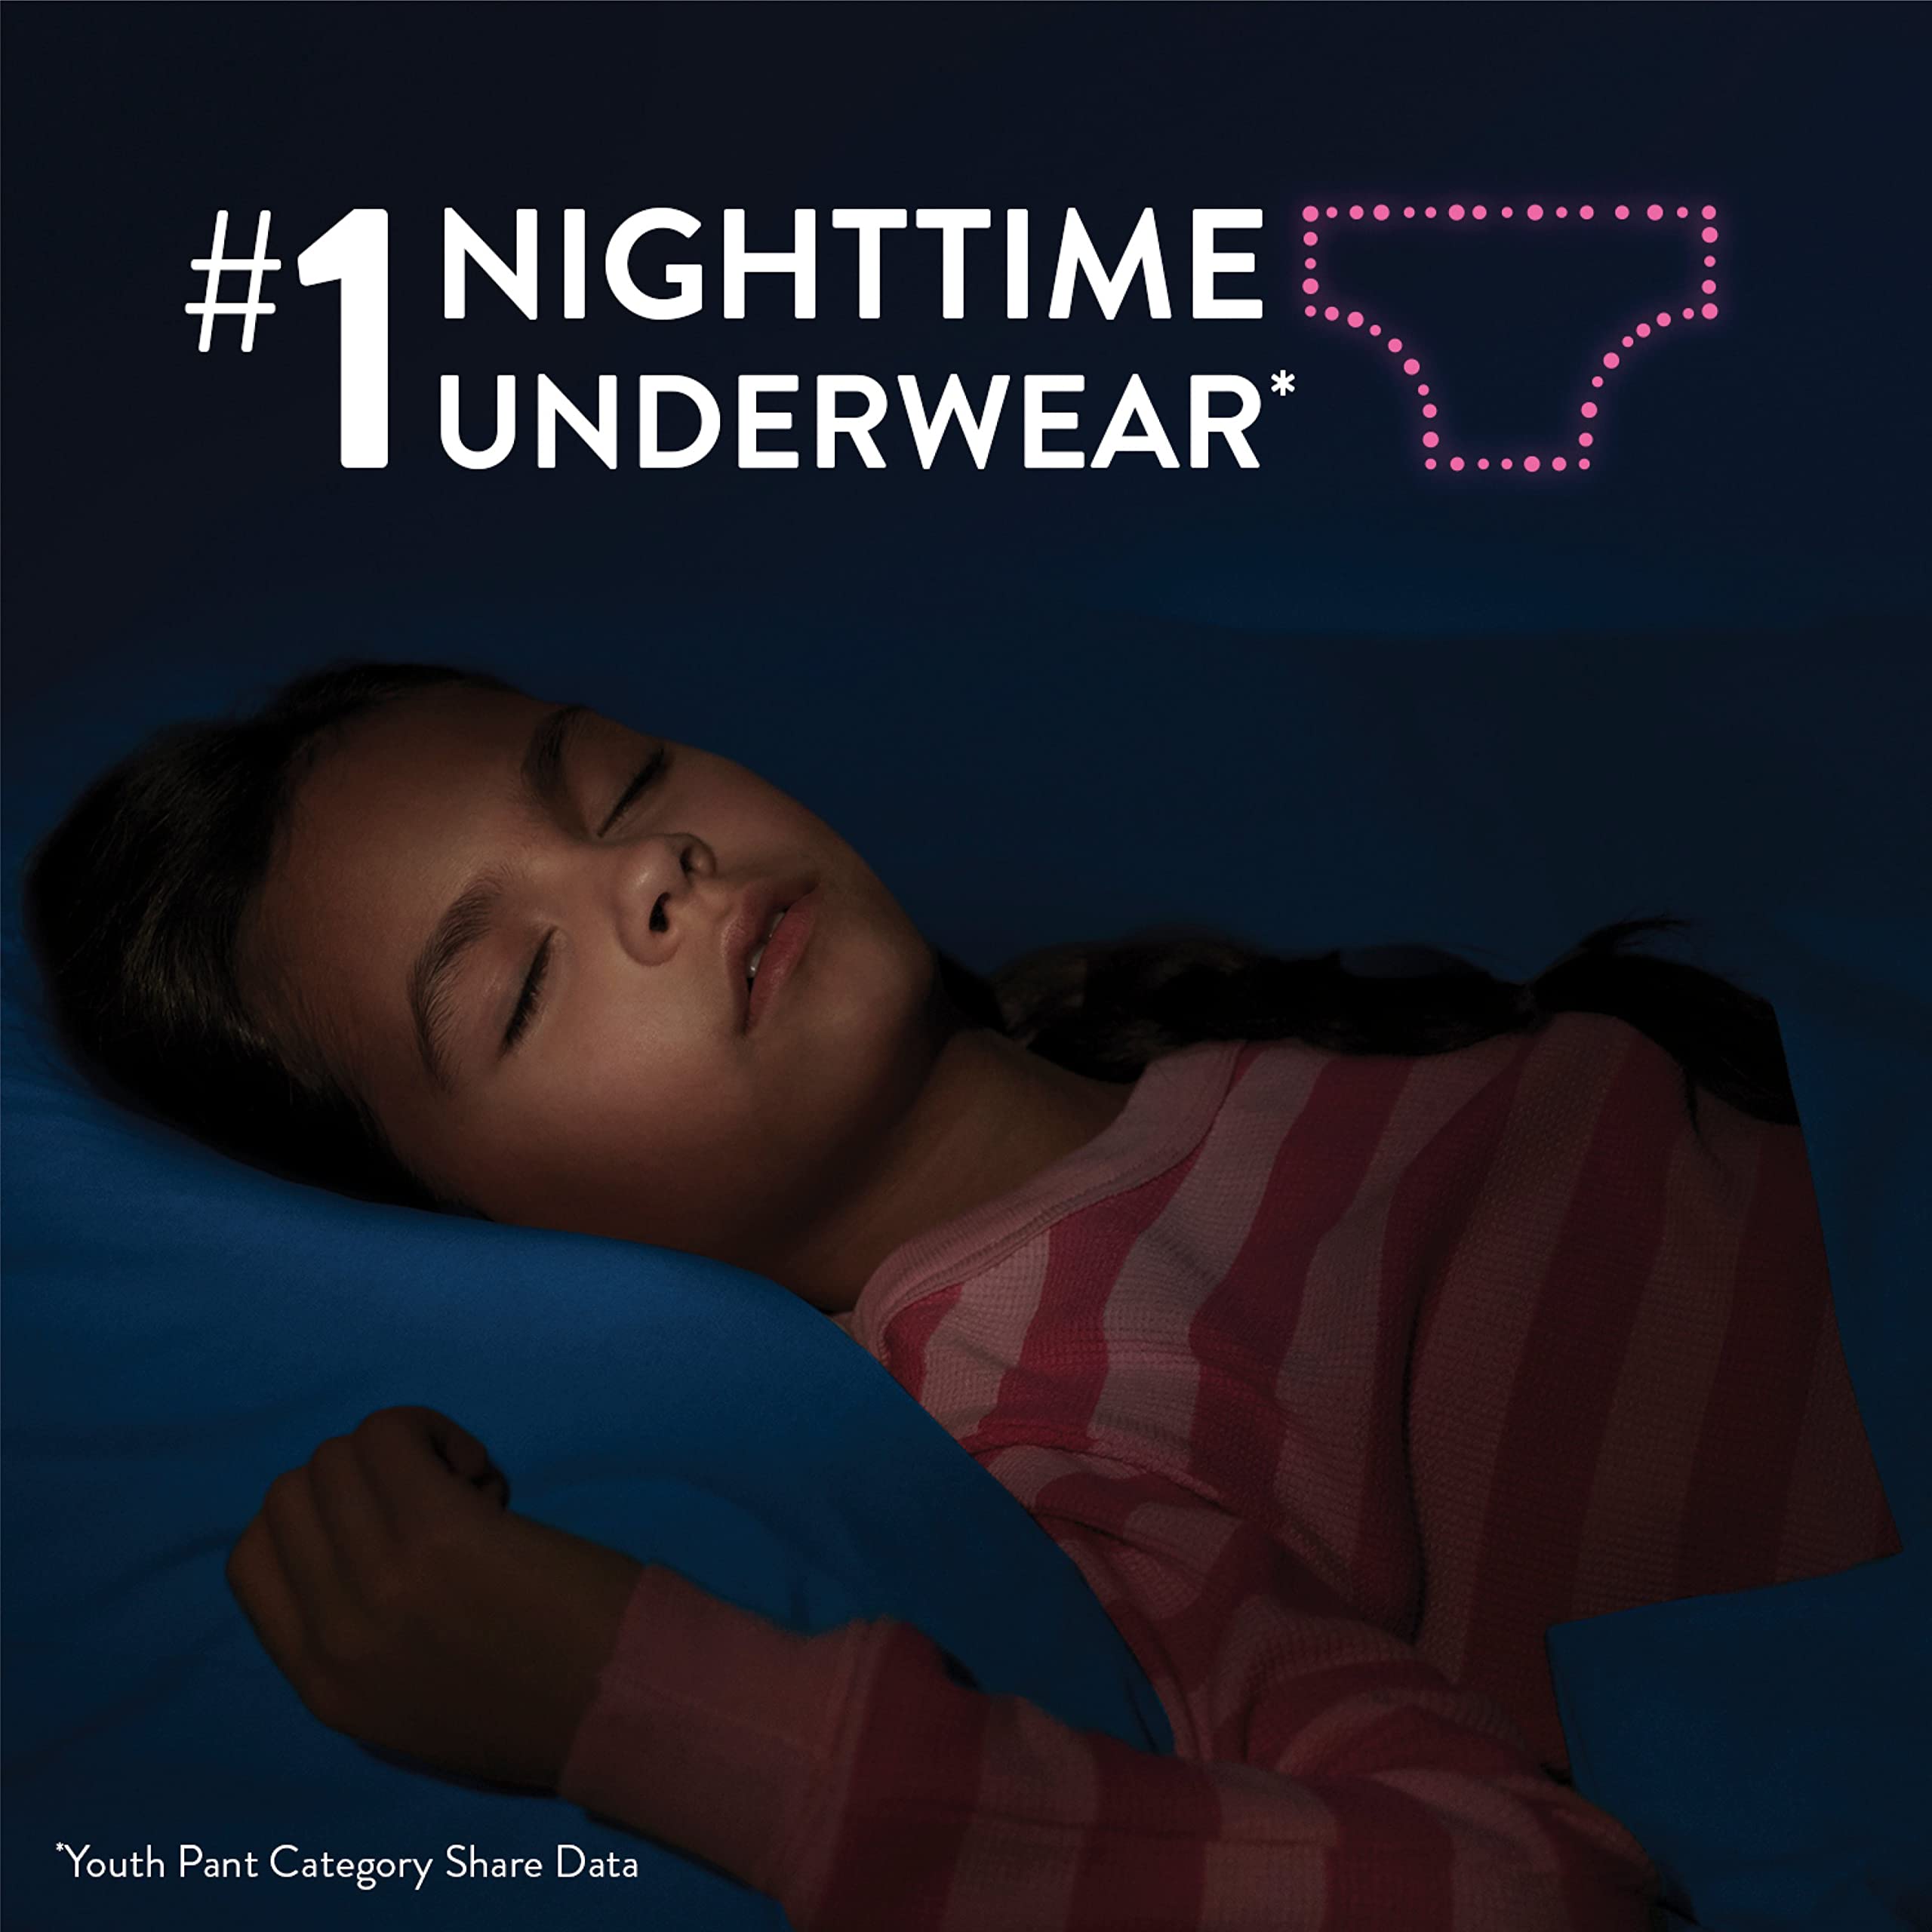 Goodnites Girls' Nighttime Bedwetting Underwear, Size Large (68-95 lbs), 34 Ct